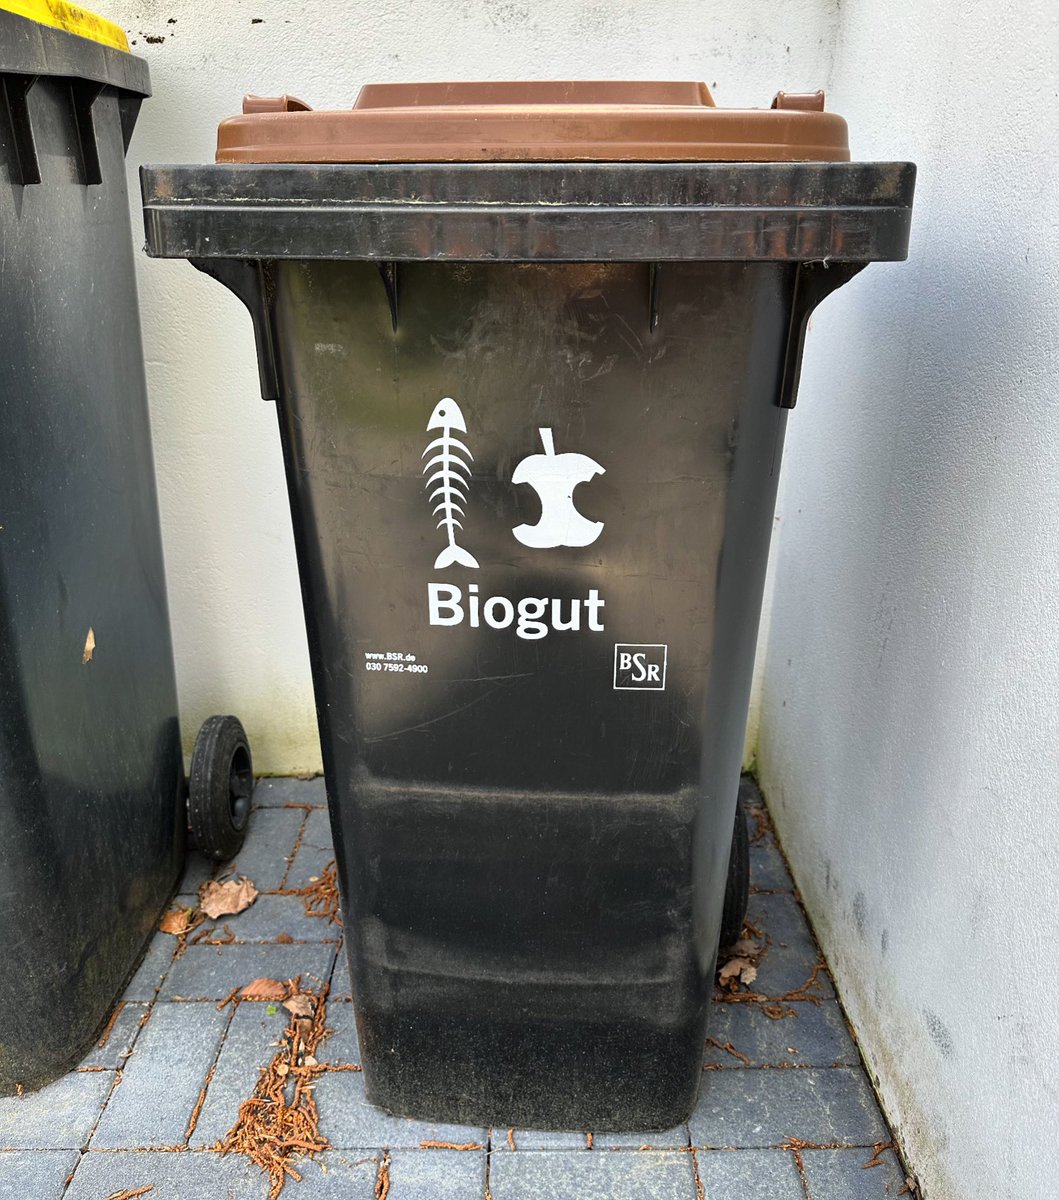 German food waste bin 🐟🍎👀 #biogut